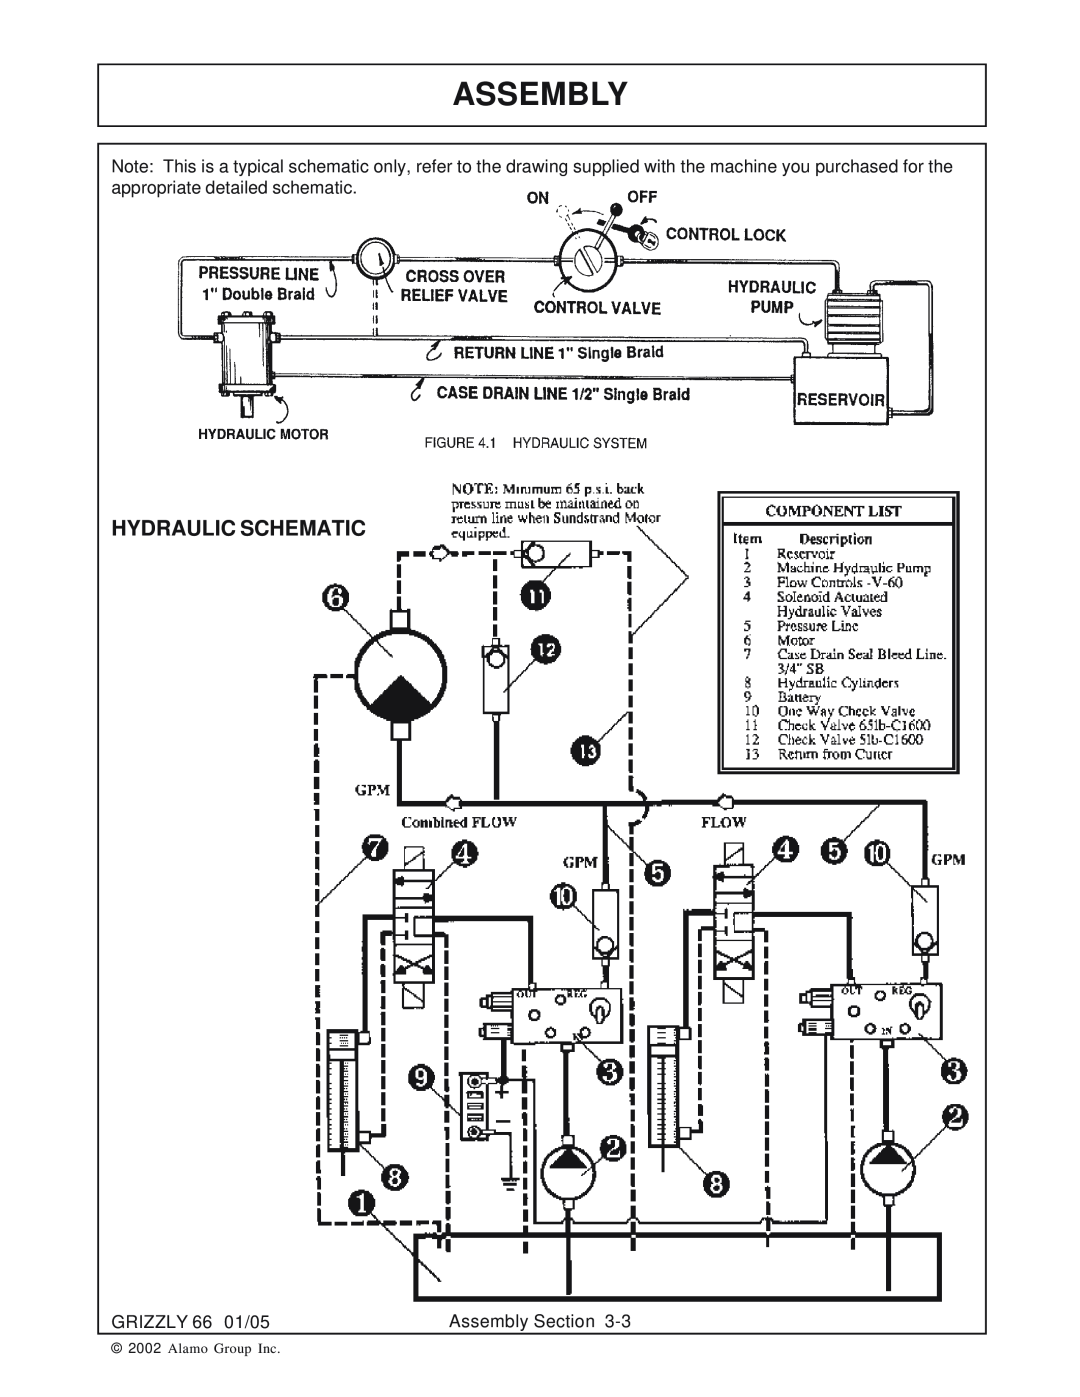 Alamo 66 manual Assembly, Hydraulic Schematic, Alamo Group Inc 